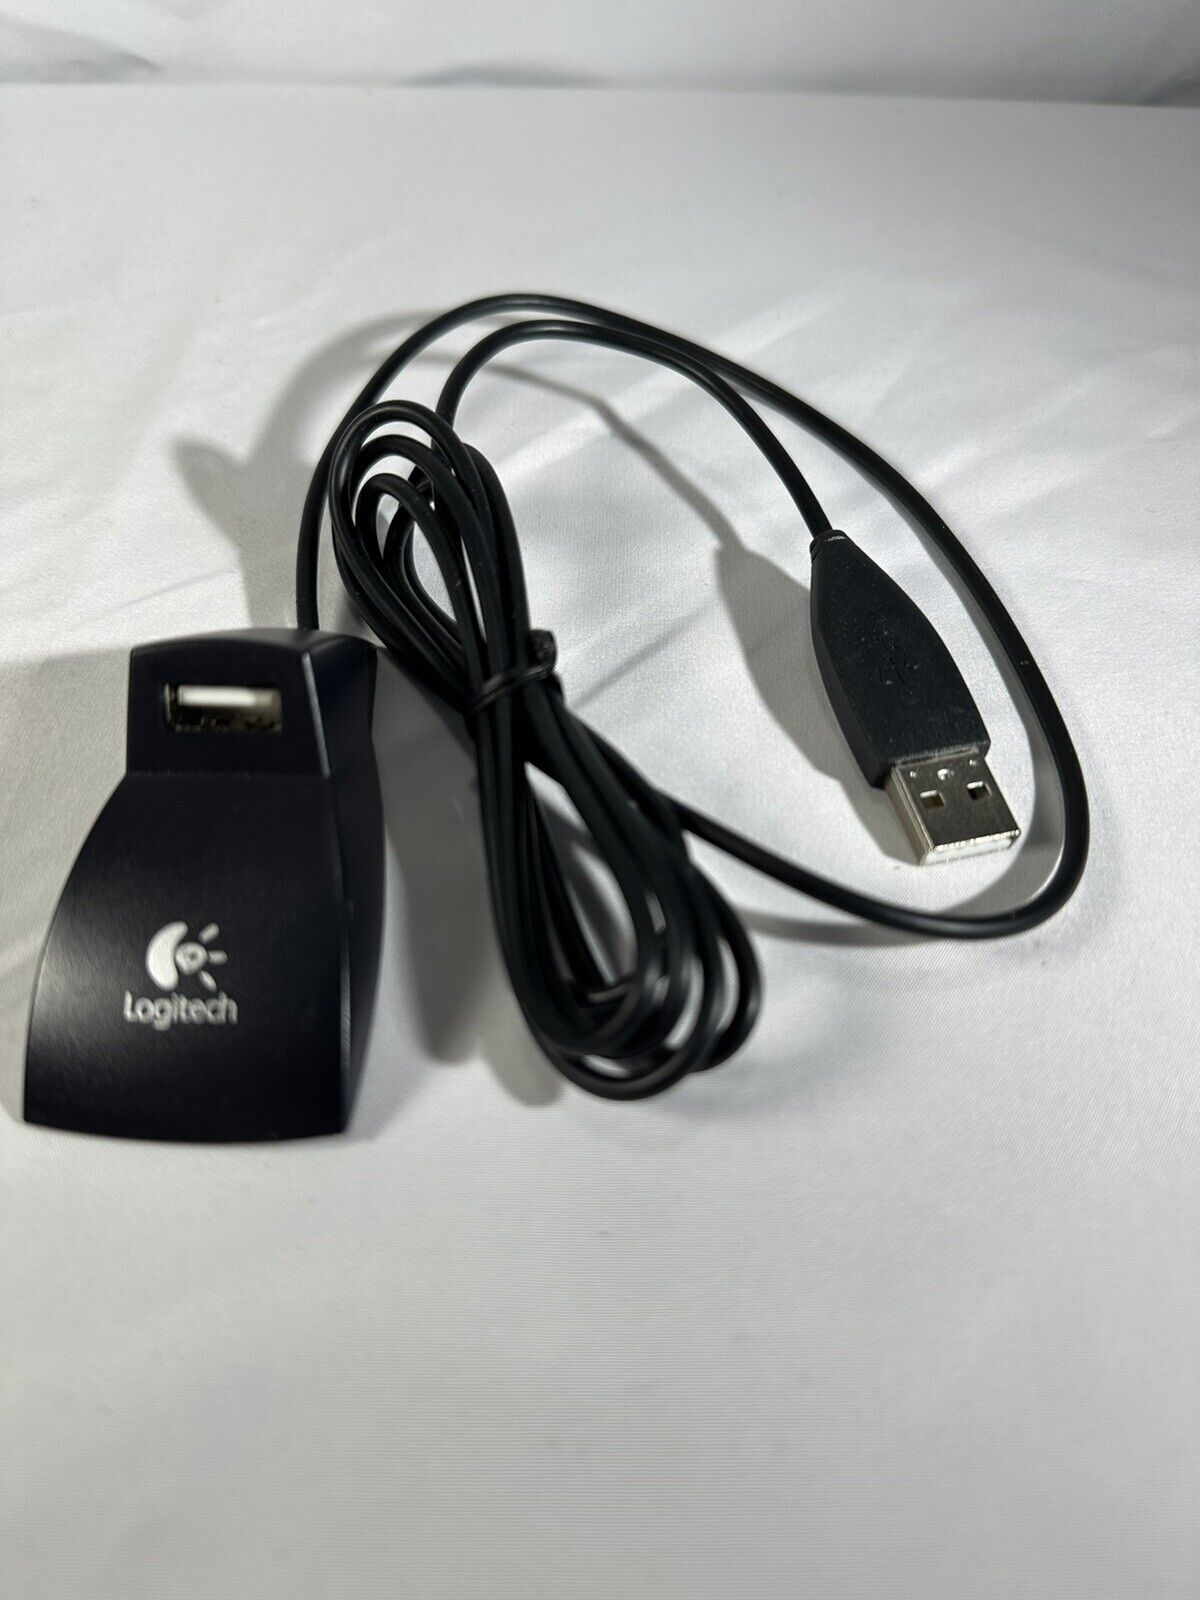 Logitech External USB Stand 501688-A000 Mouse Keyboard Webcam Headset Flashdrive